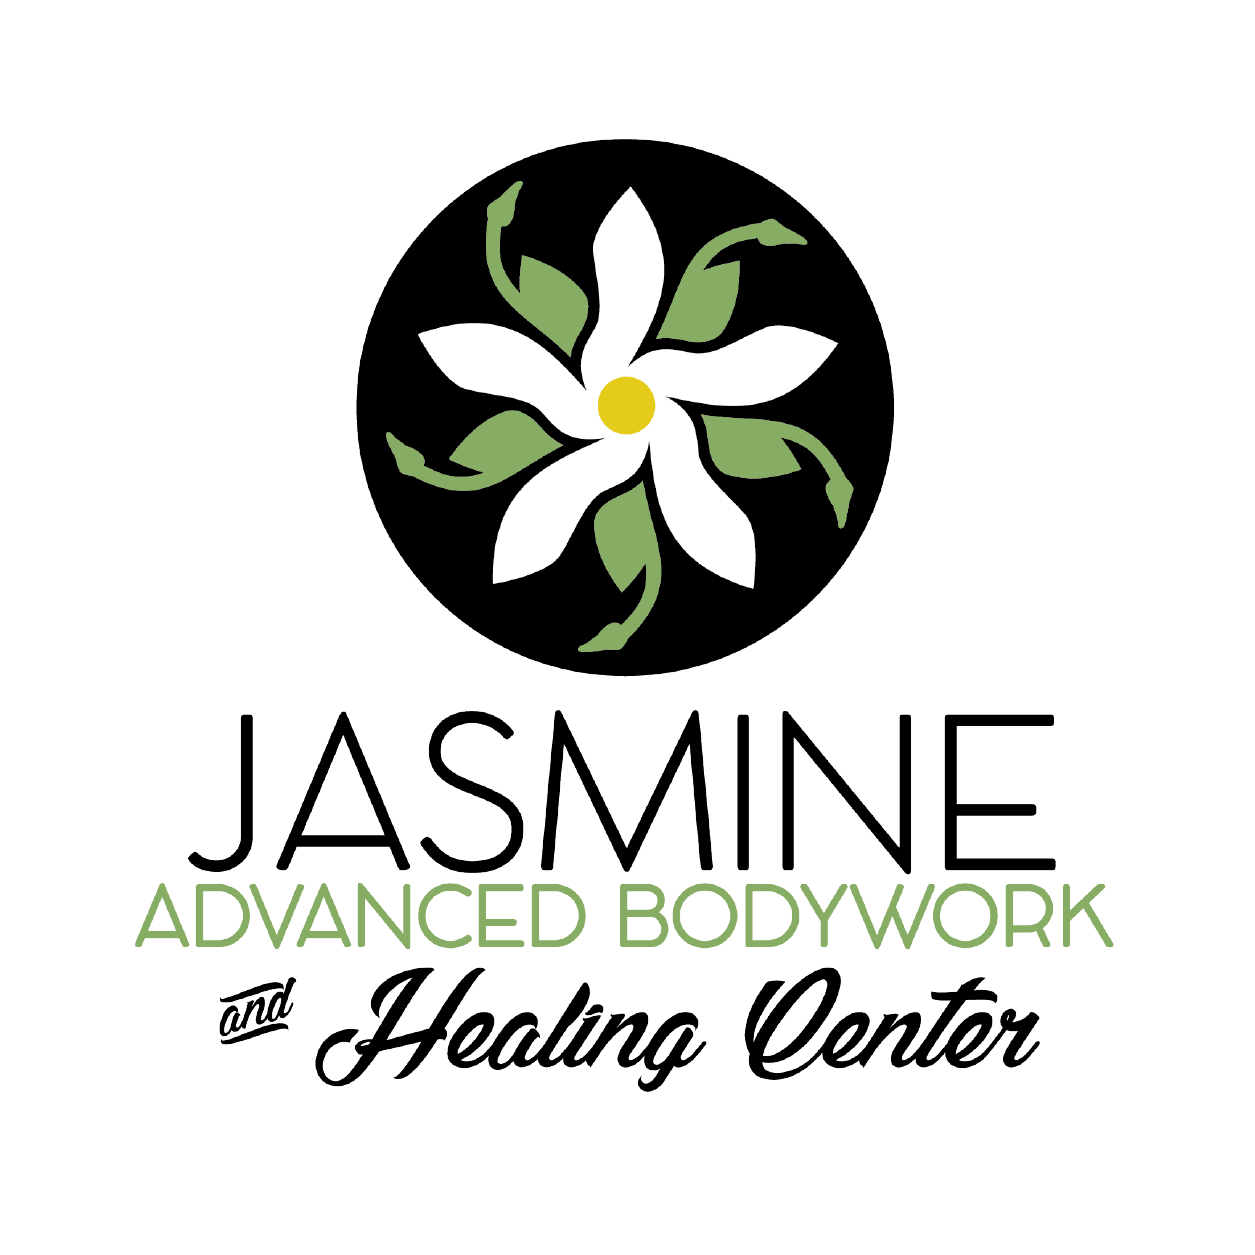 Jasmine Advanced Body Work and Healing Center